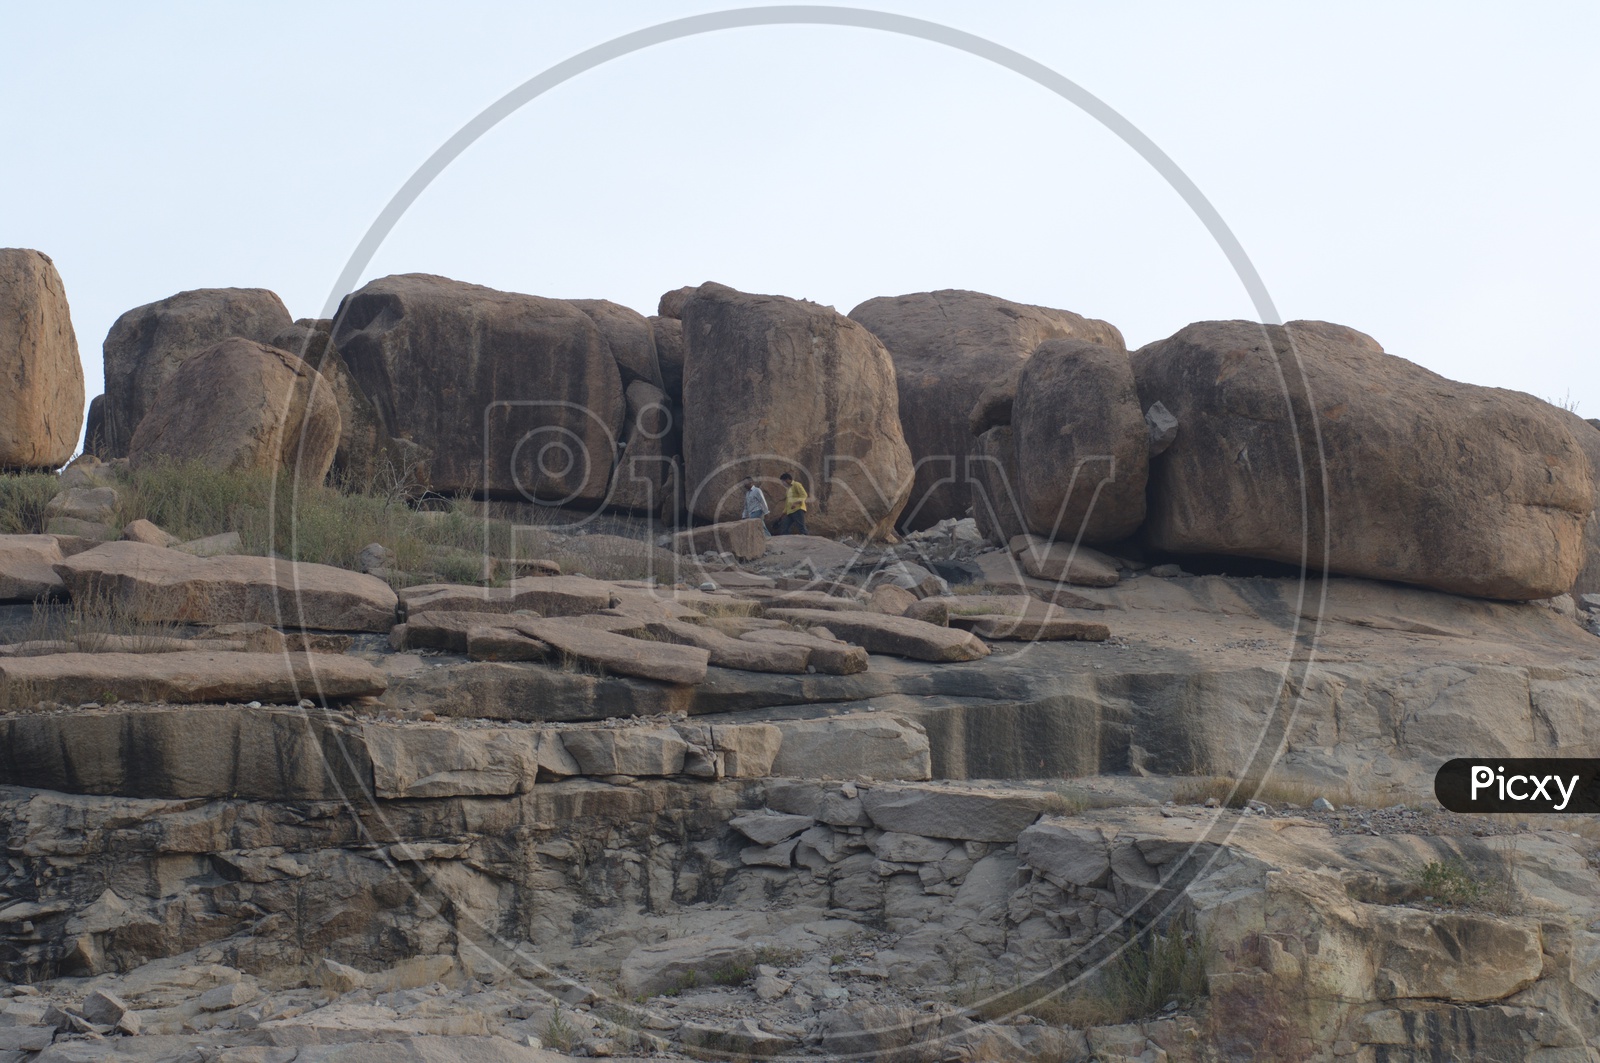 Two men walking alongside the massive granite boulders